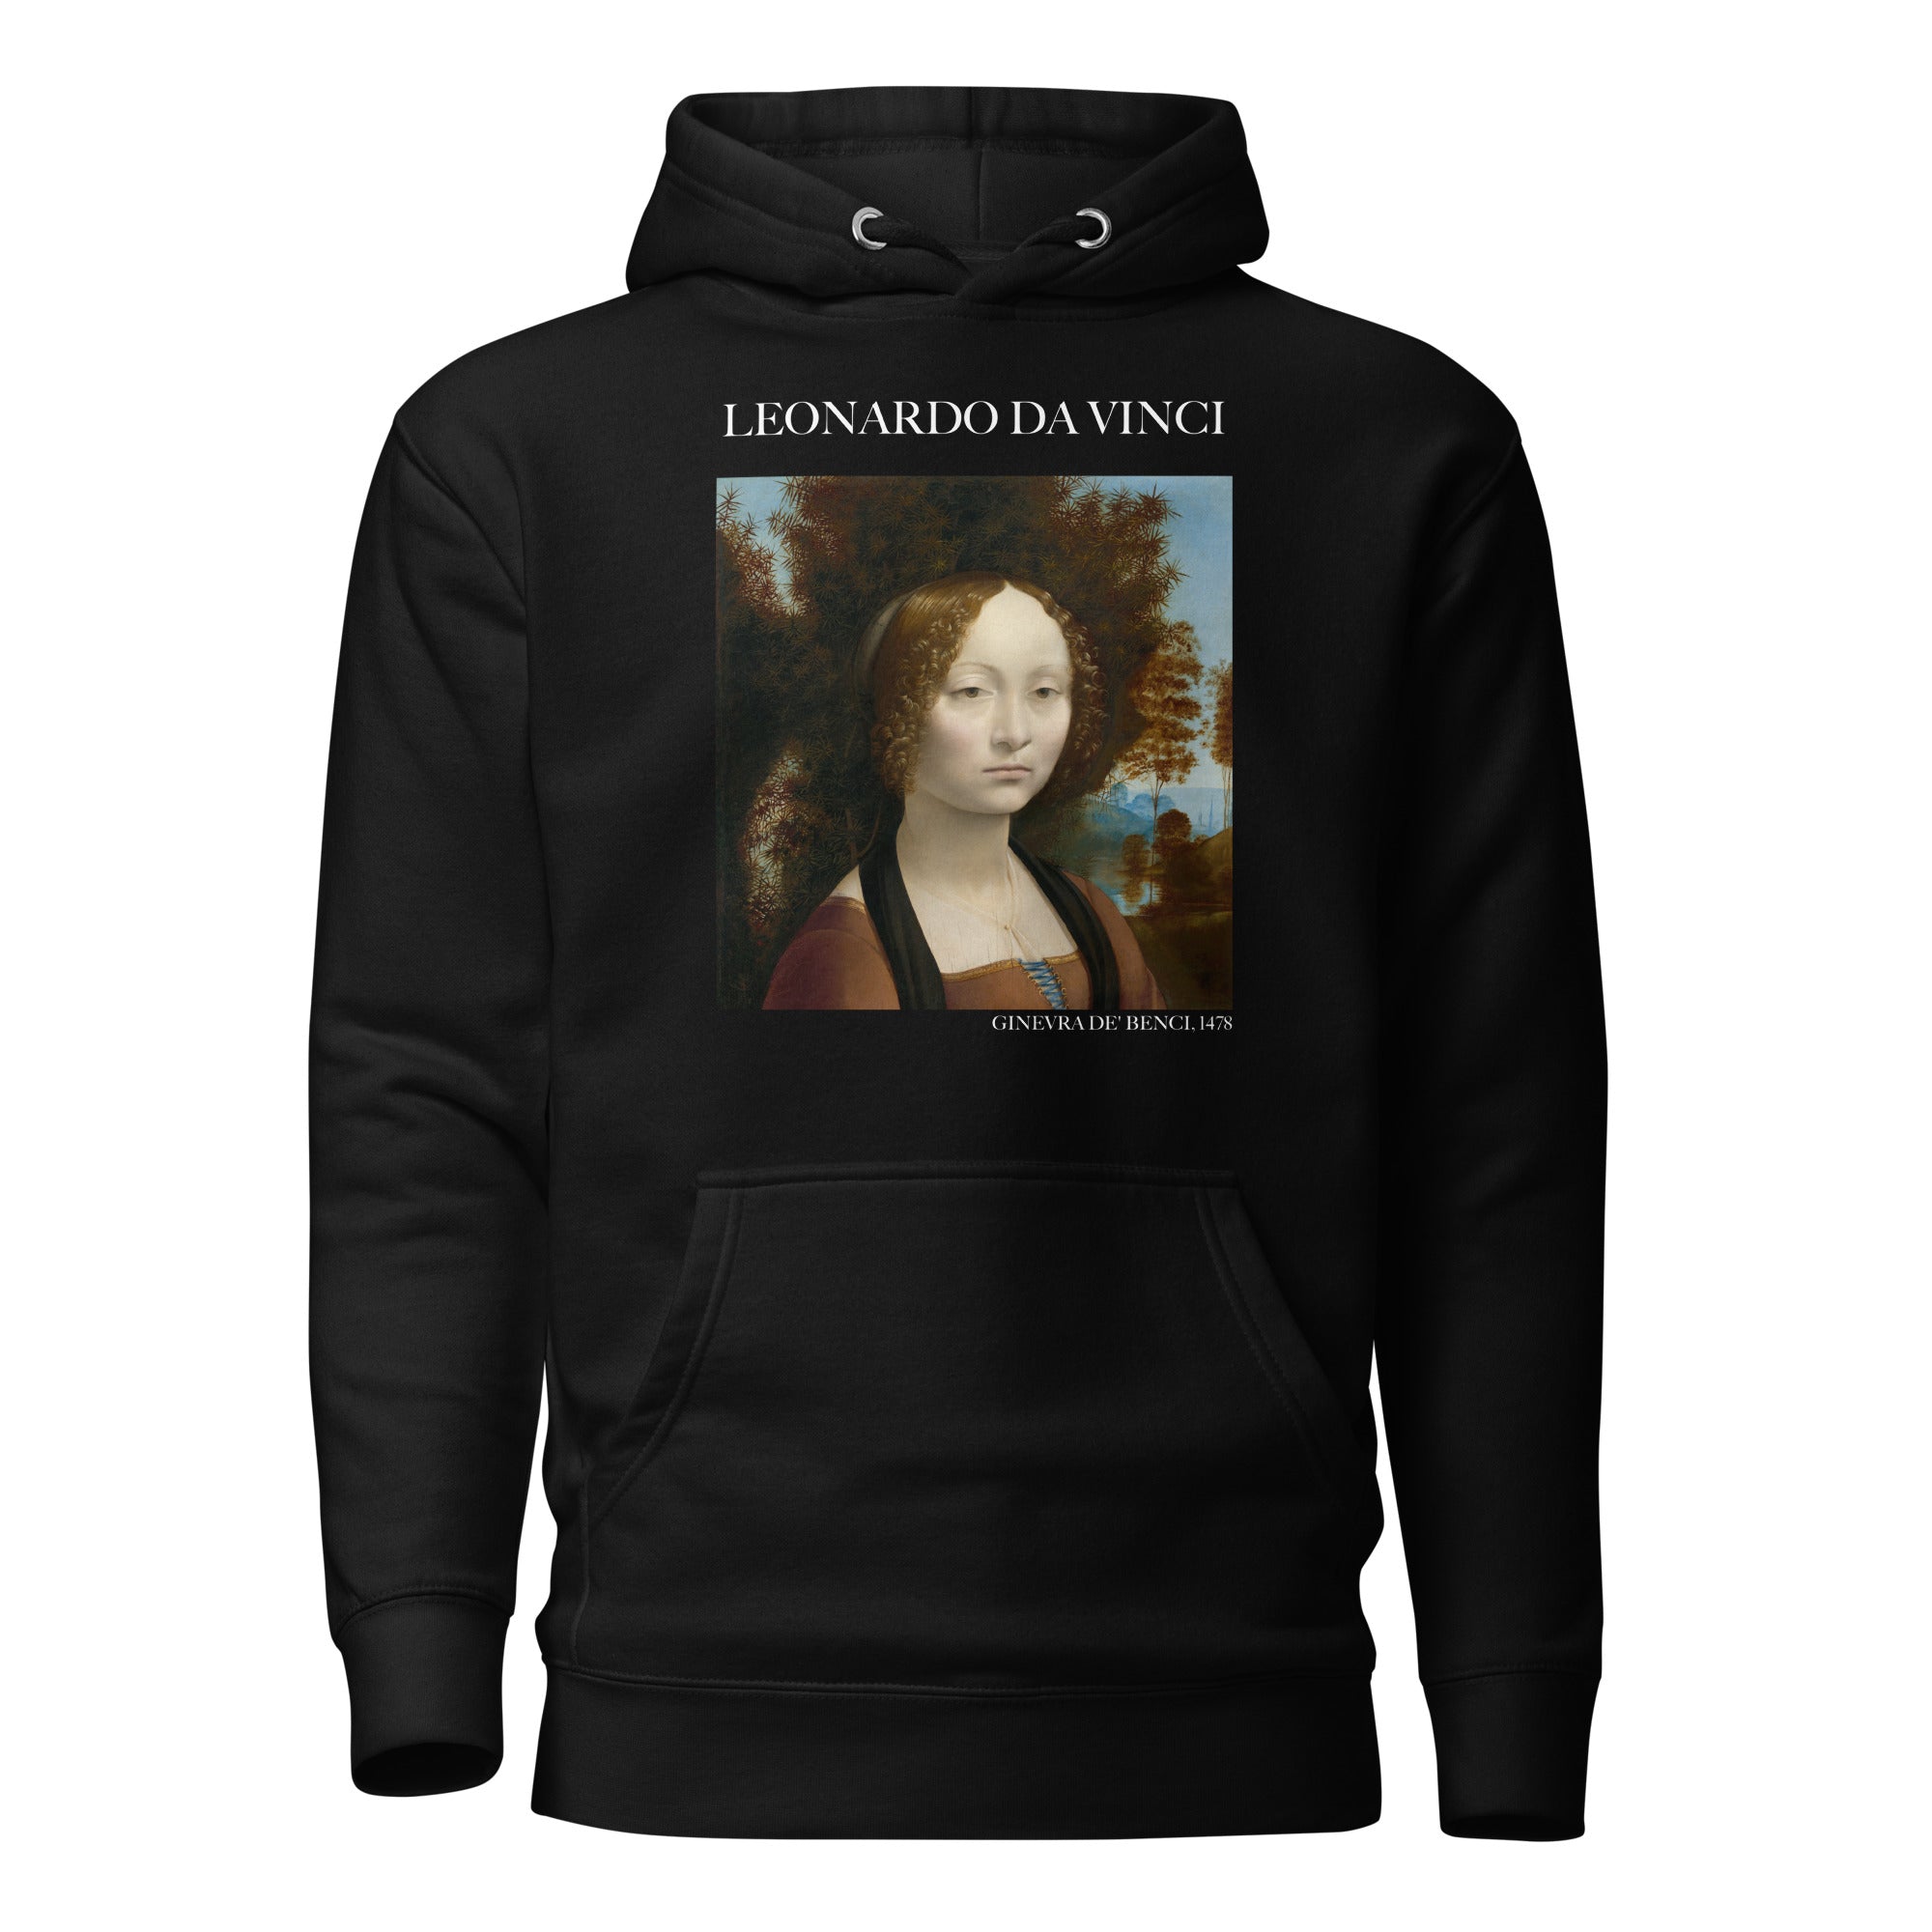 Kapuzenpullover mit berühmtem Gemälde „Ginevra de‘ Benci“ von Leonardo da Vinci | Unisex-Kapuzenpullover mit Premium-Kunstmotiv